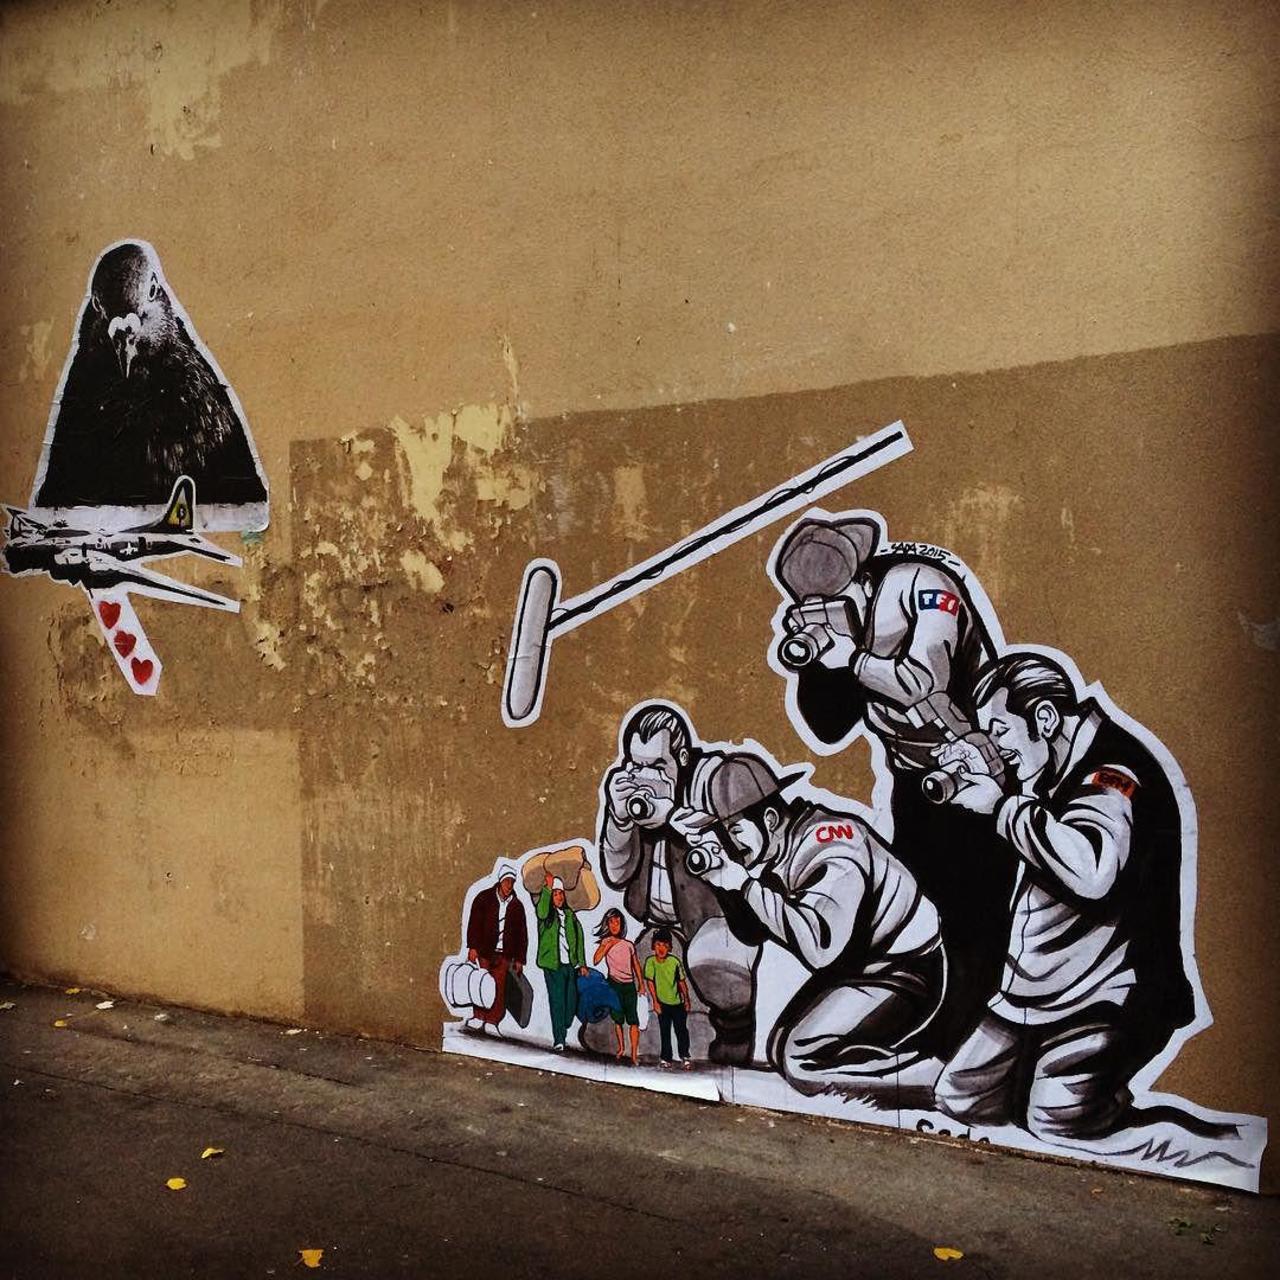 #Paris #graffiti photo by @allaboutparisandbeyond http://ift.tt/1VYXAf5 #StreetArt http://t.co/OGOPpfUABQ